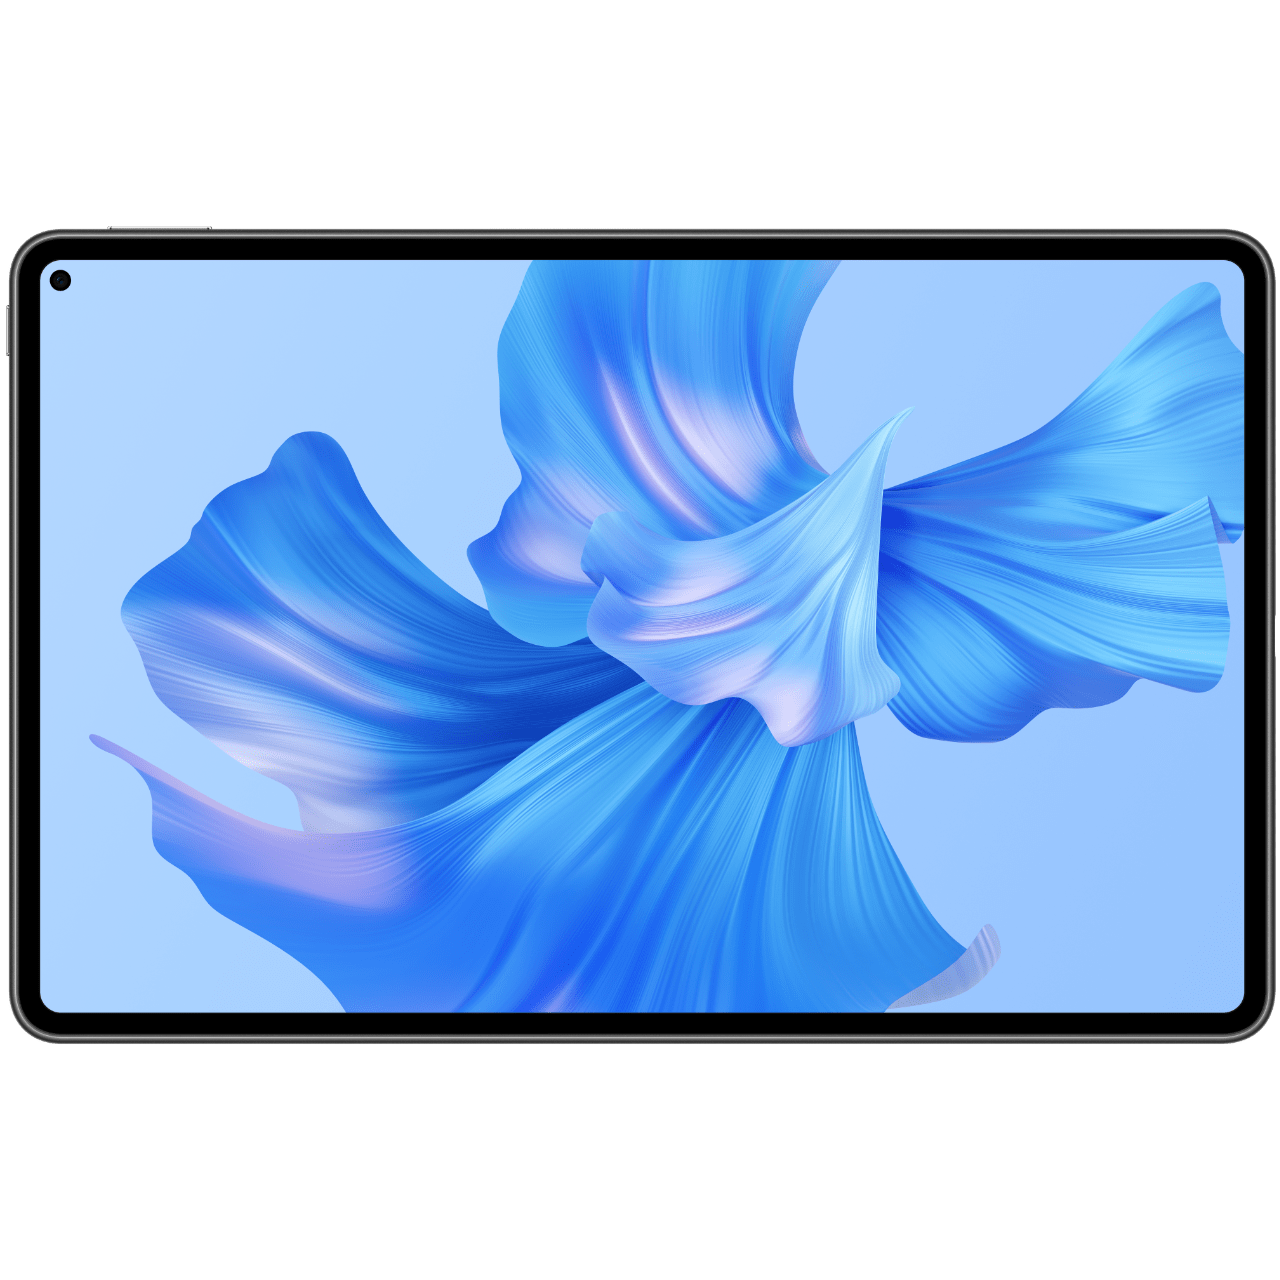 Huawei MatePad Pro 11 (2022)